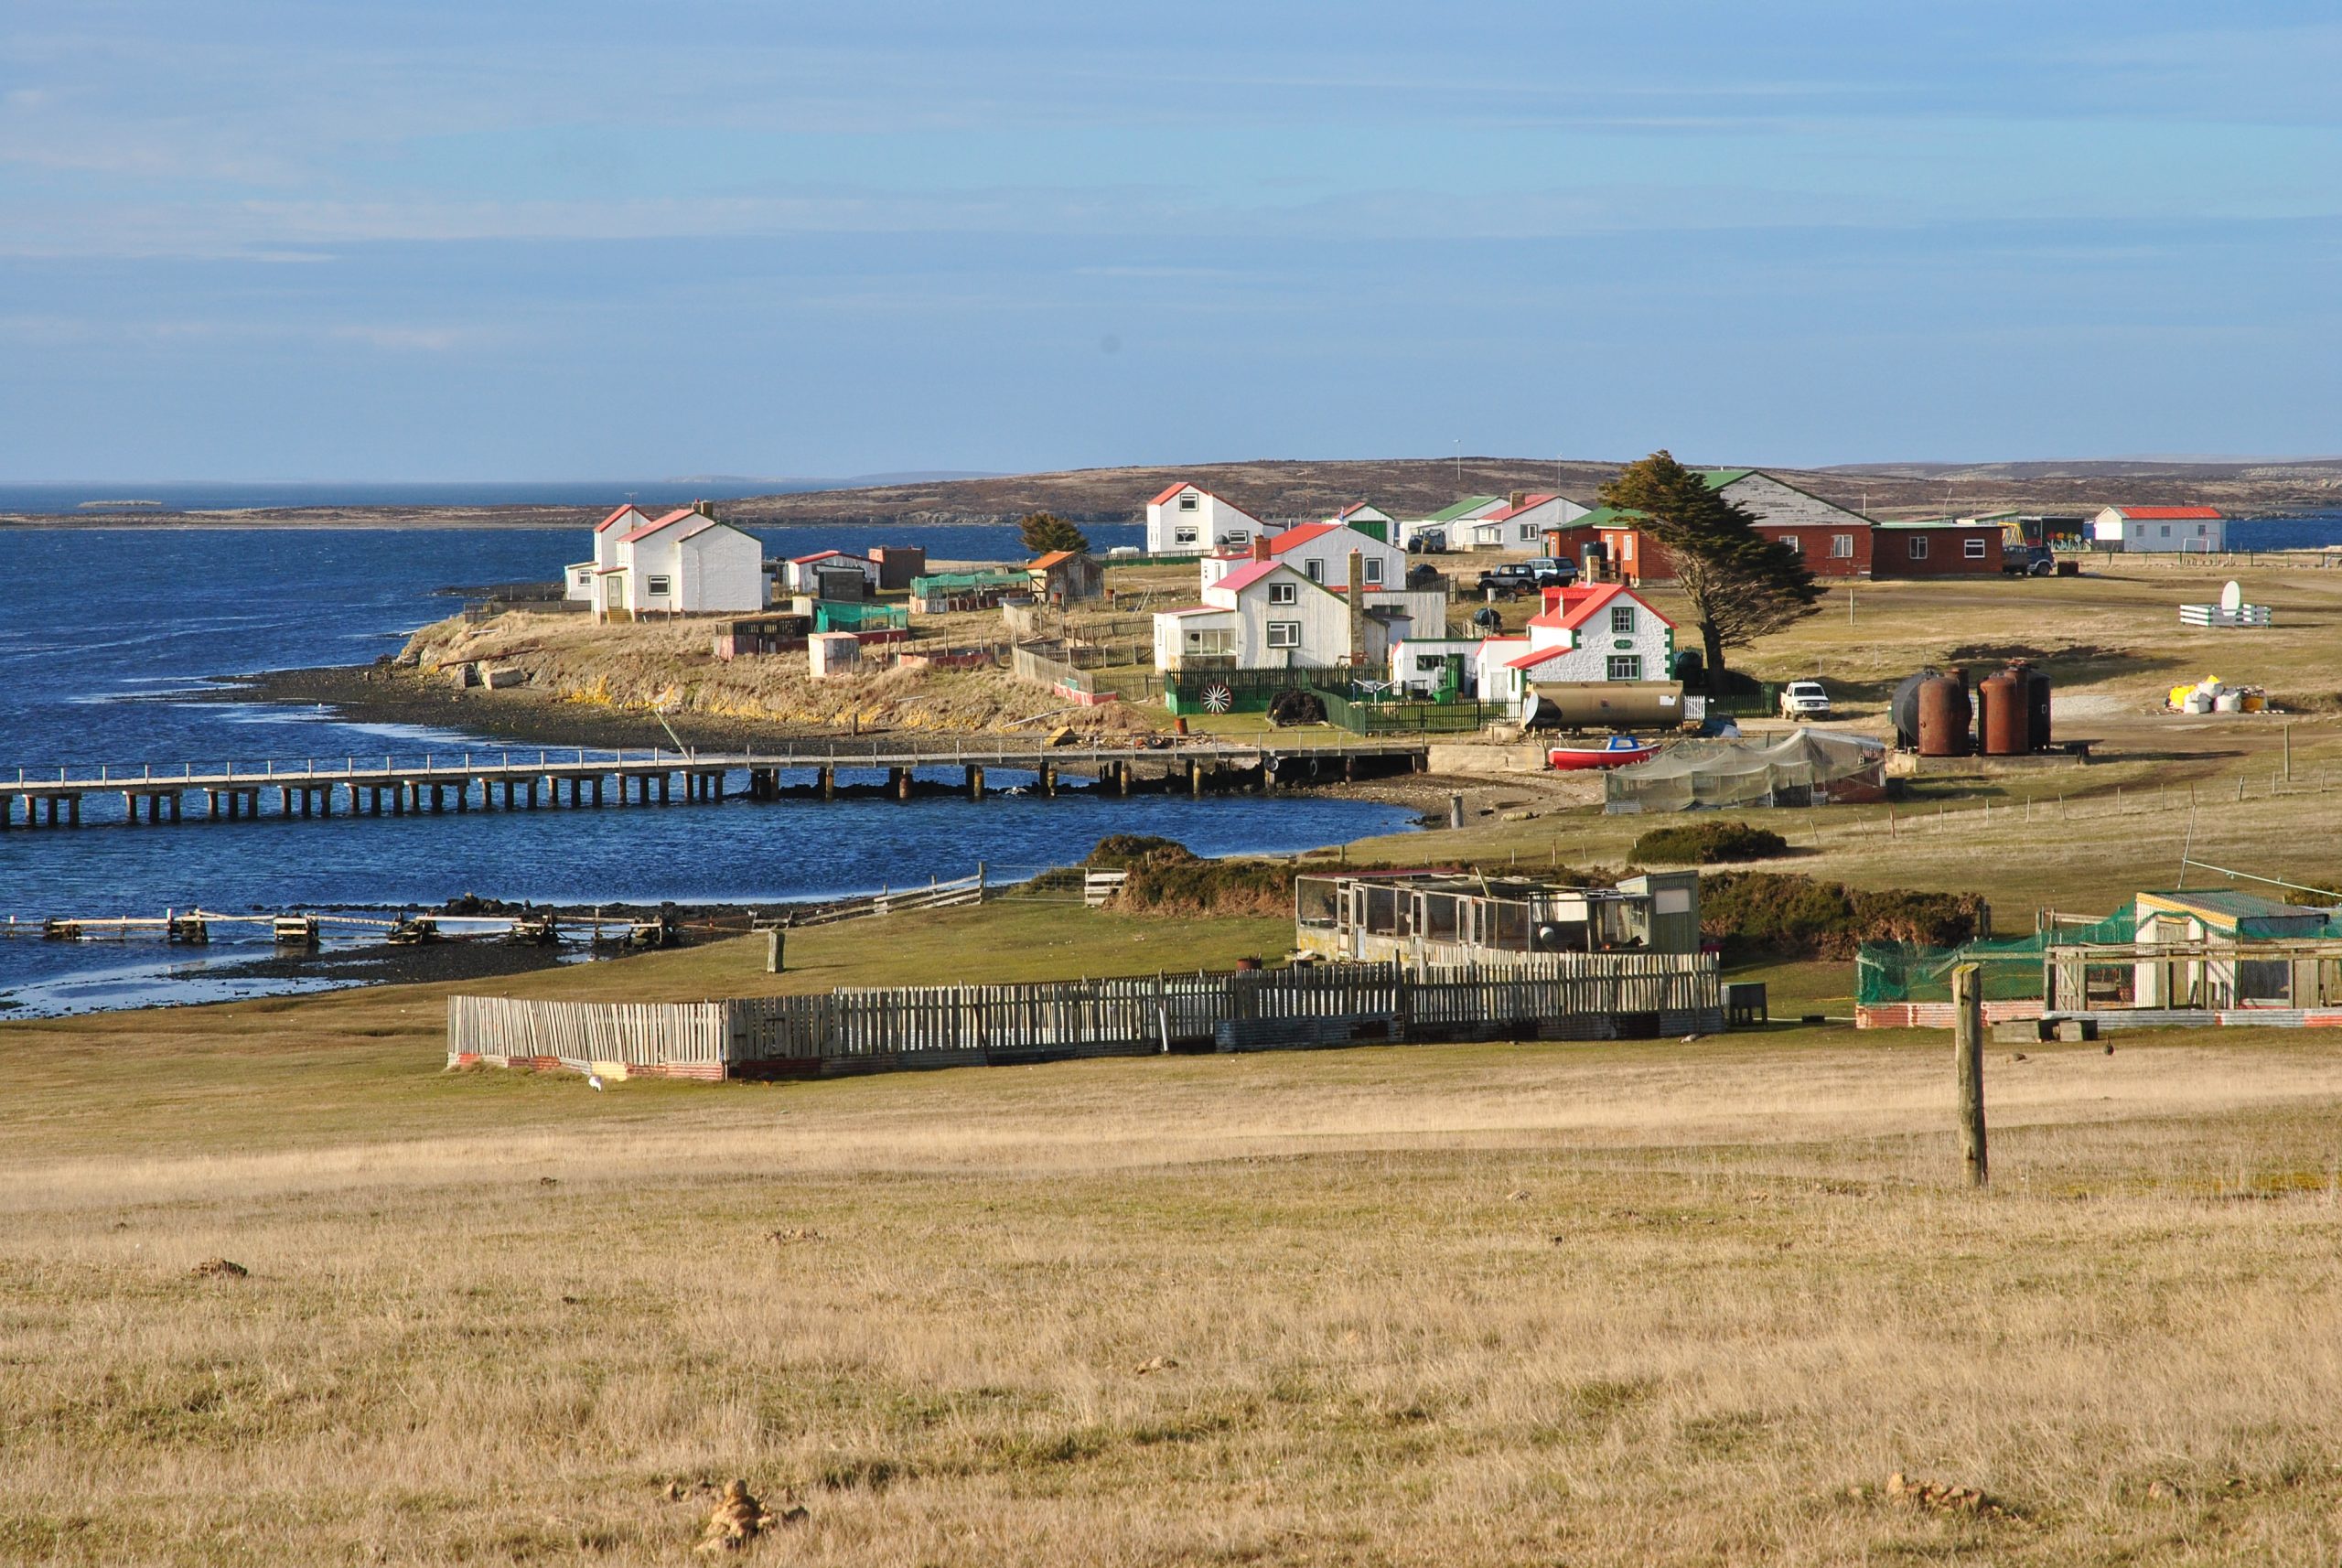 The Falkland Islands (Photo: John5199 / Wikimedia)